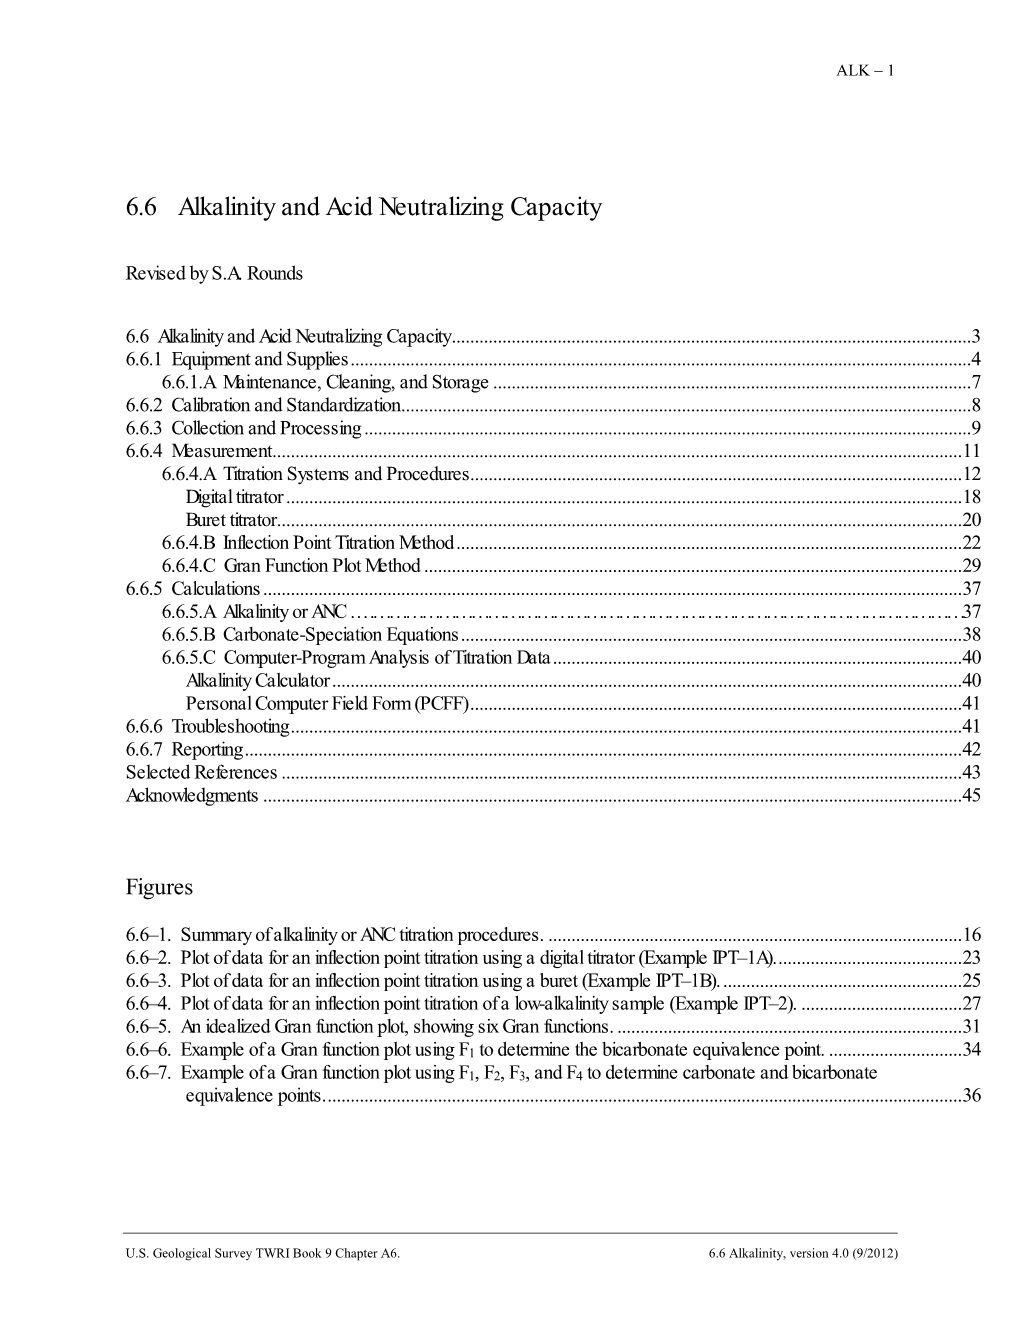 6.6 Alkalinity and Acid Neutralizing Capacity